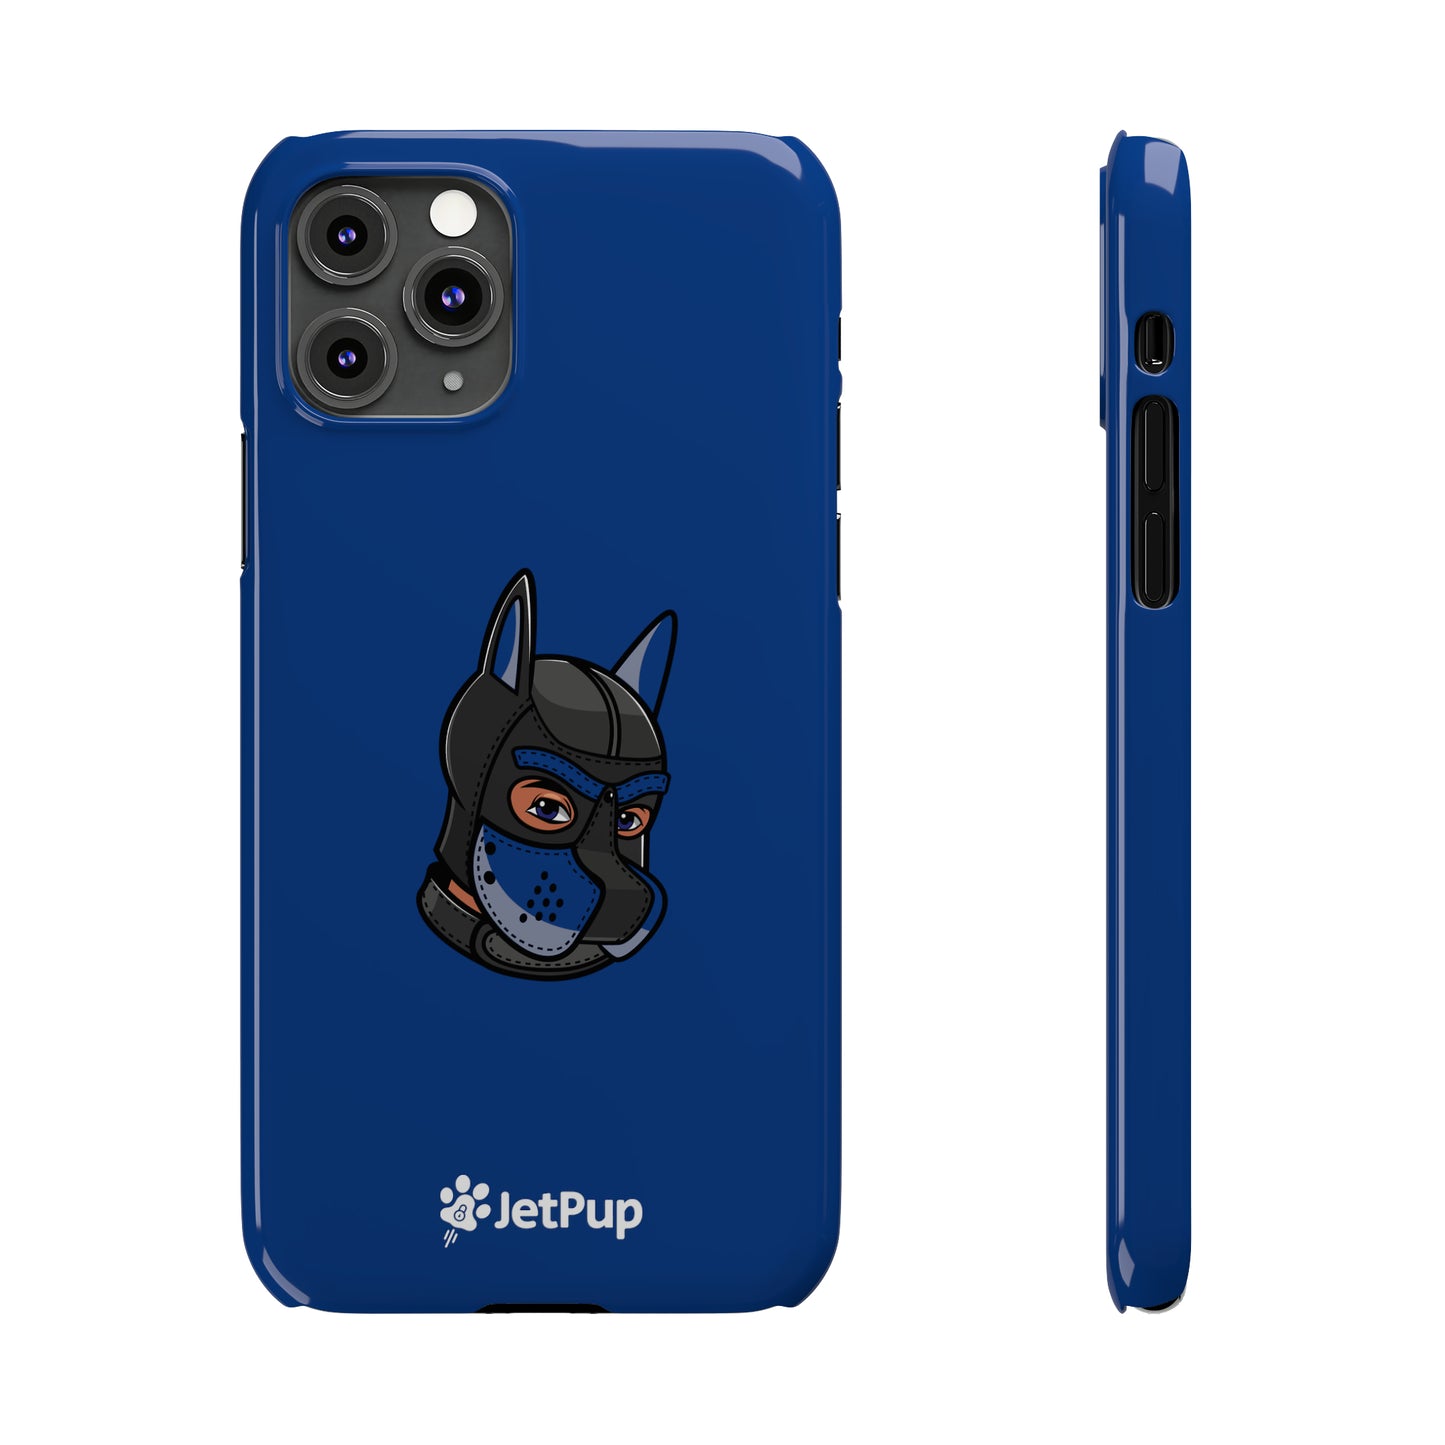 Pup Hood Slim iPhone Cases - Blue